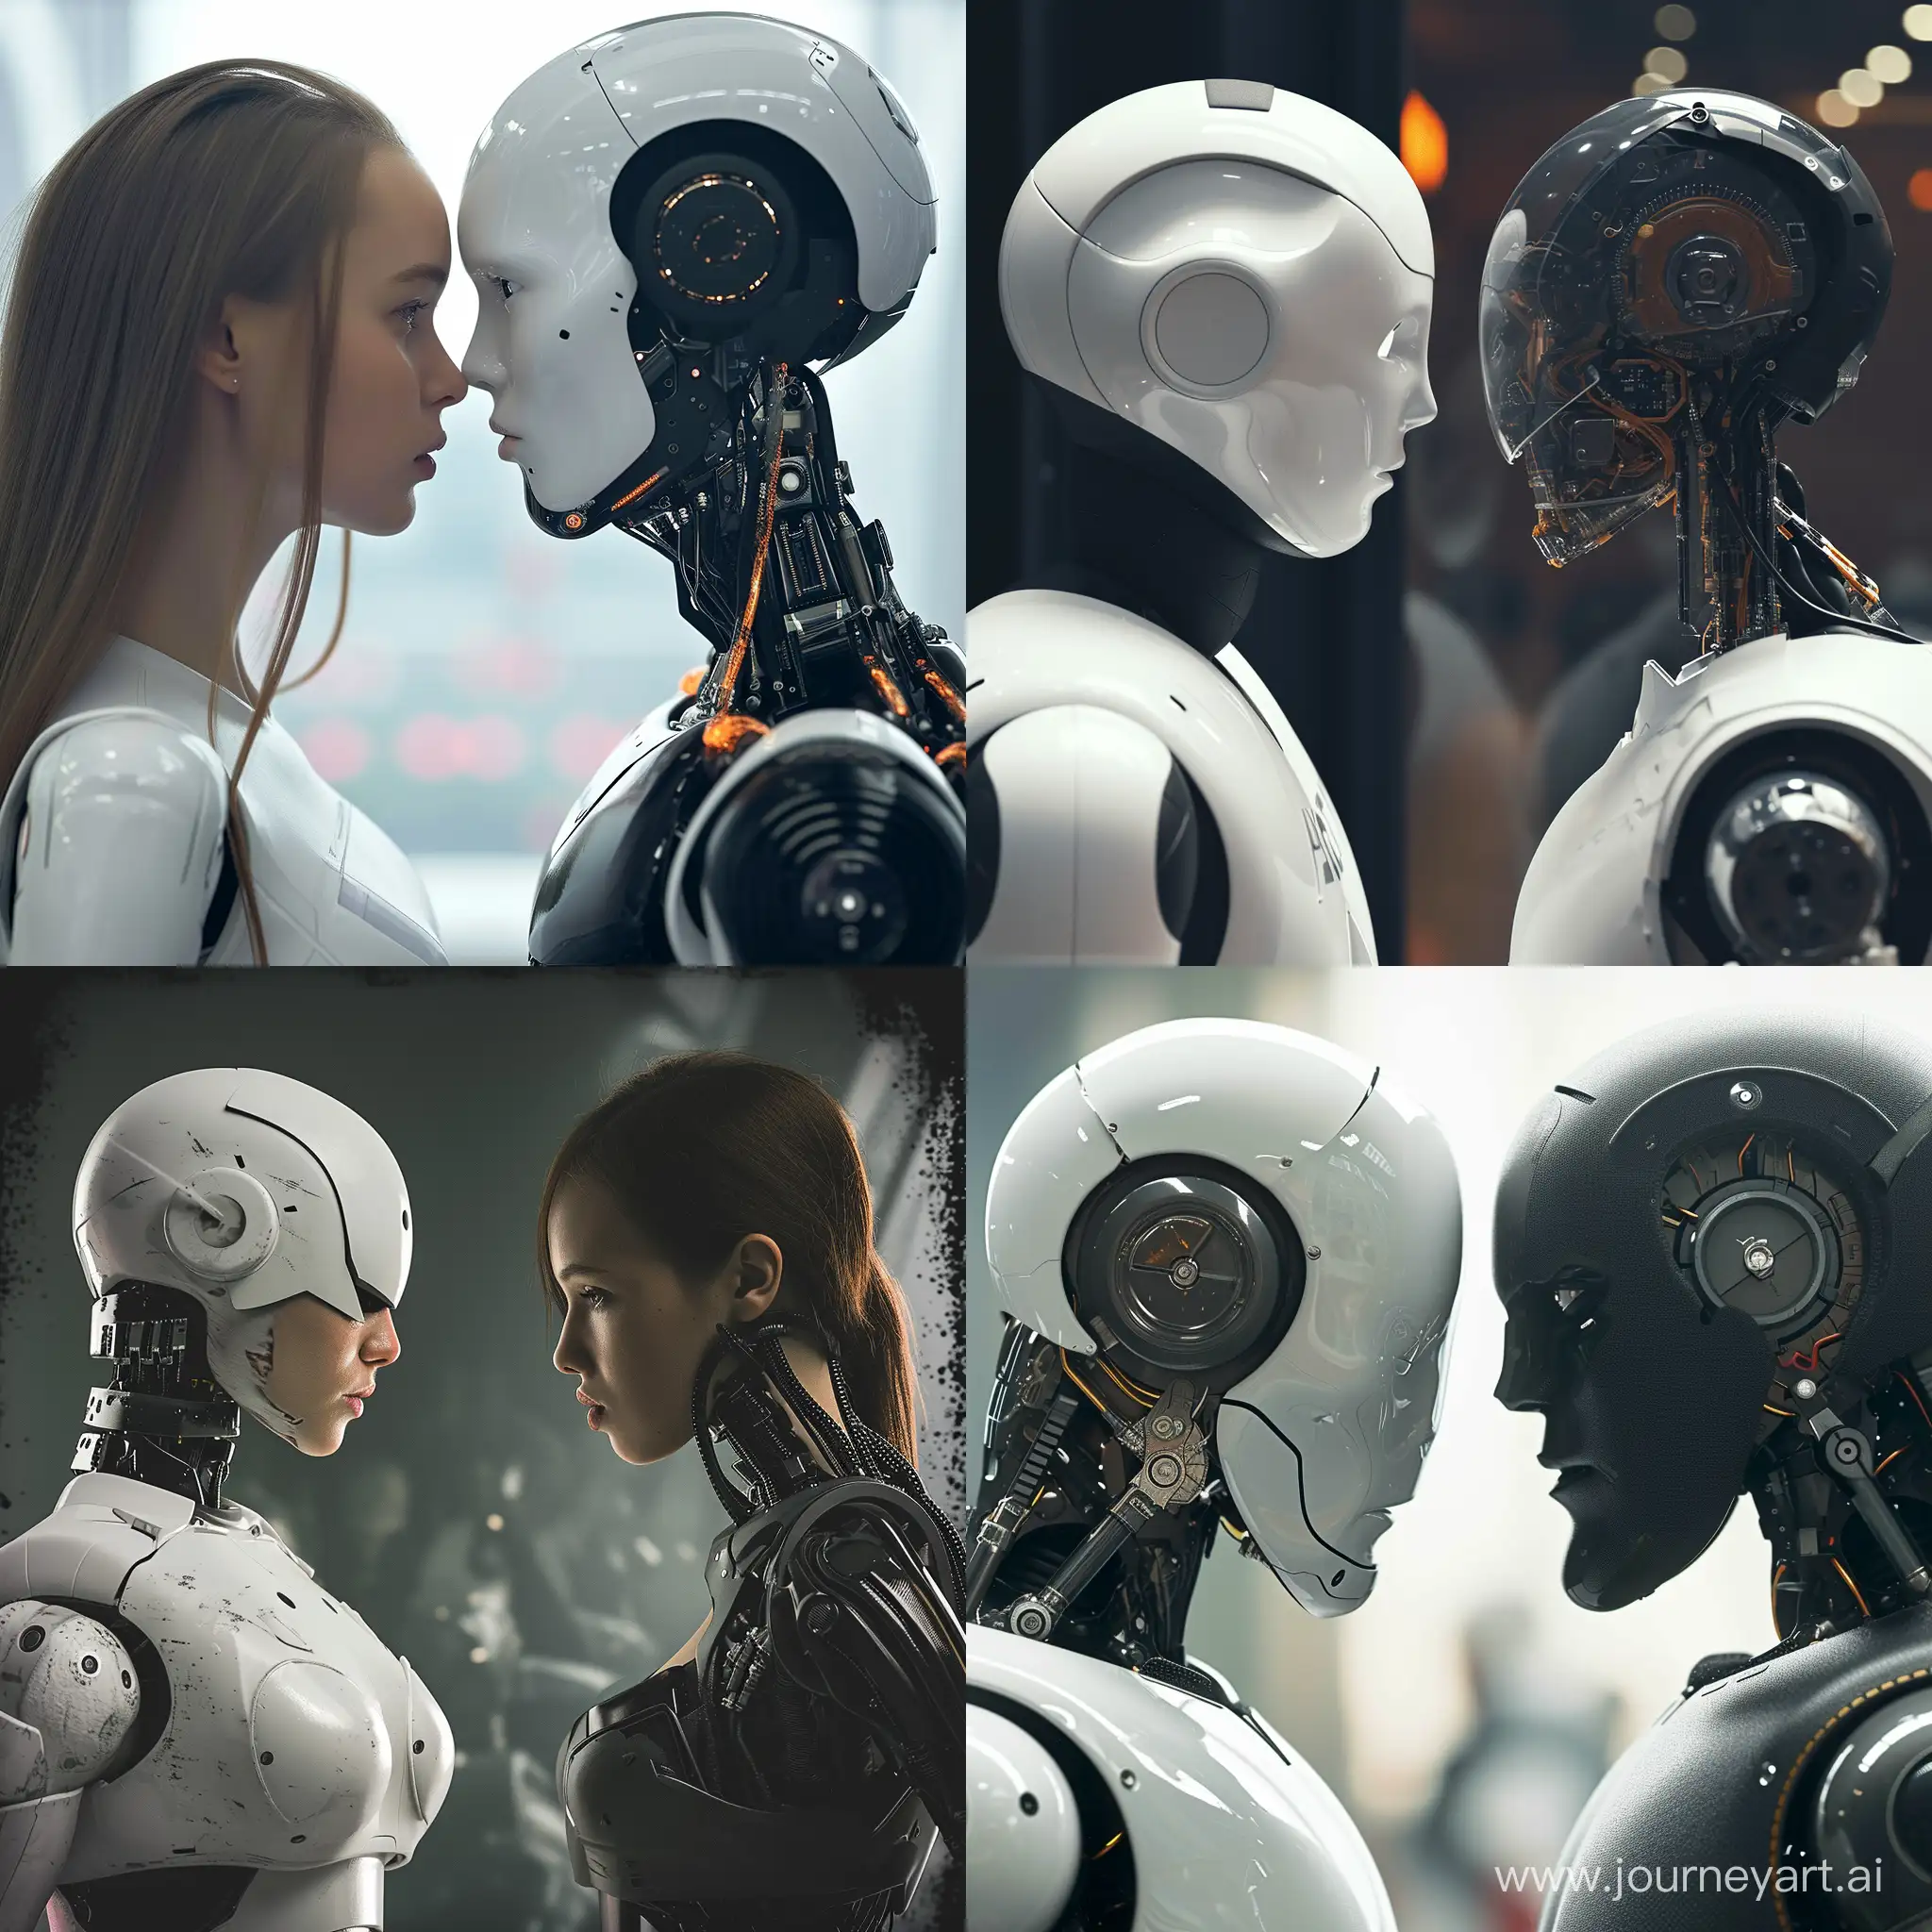 AI-vs-Human-Digital-Art-Duel-Version-6-Aspect-Ratio-11-Image-77442